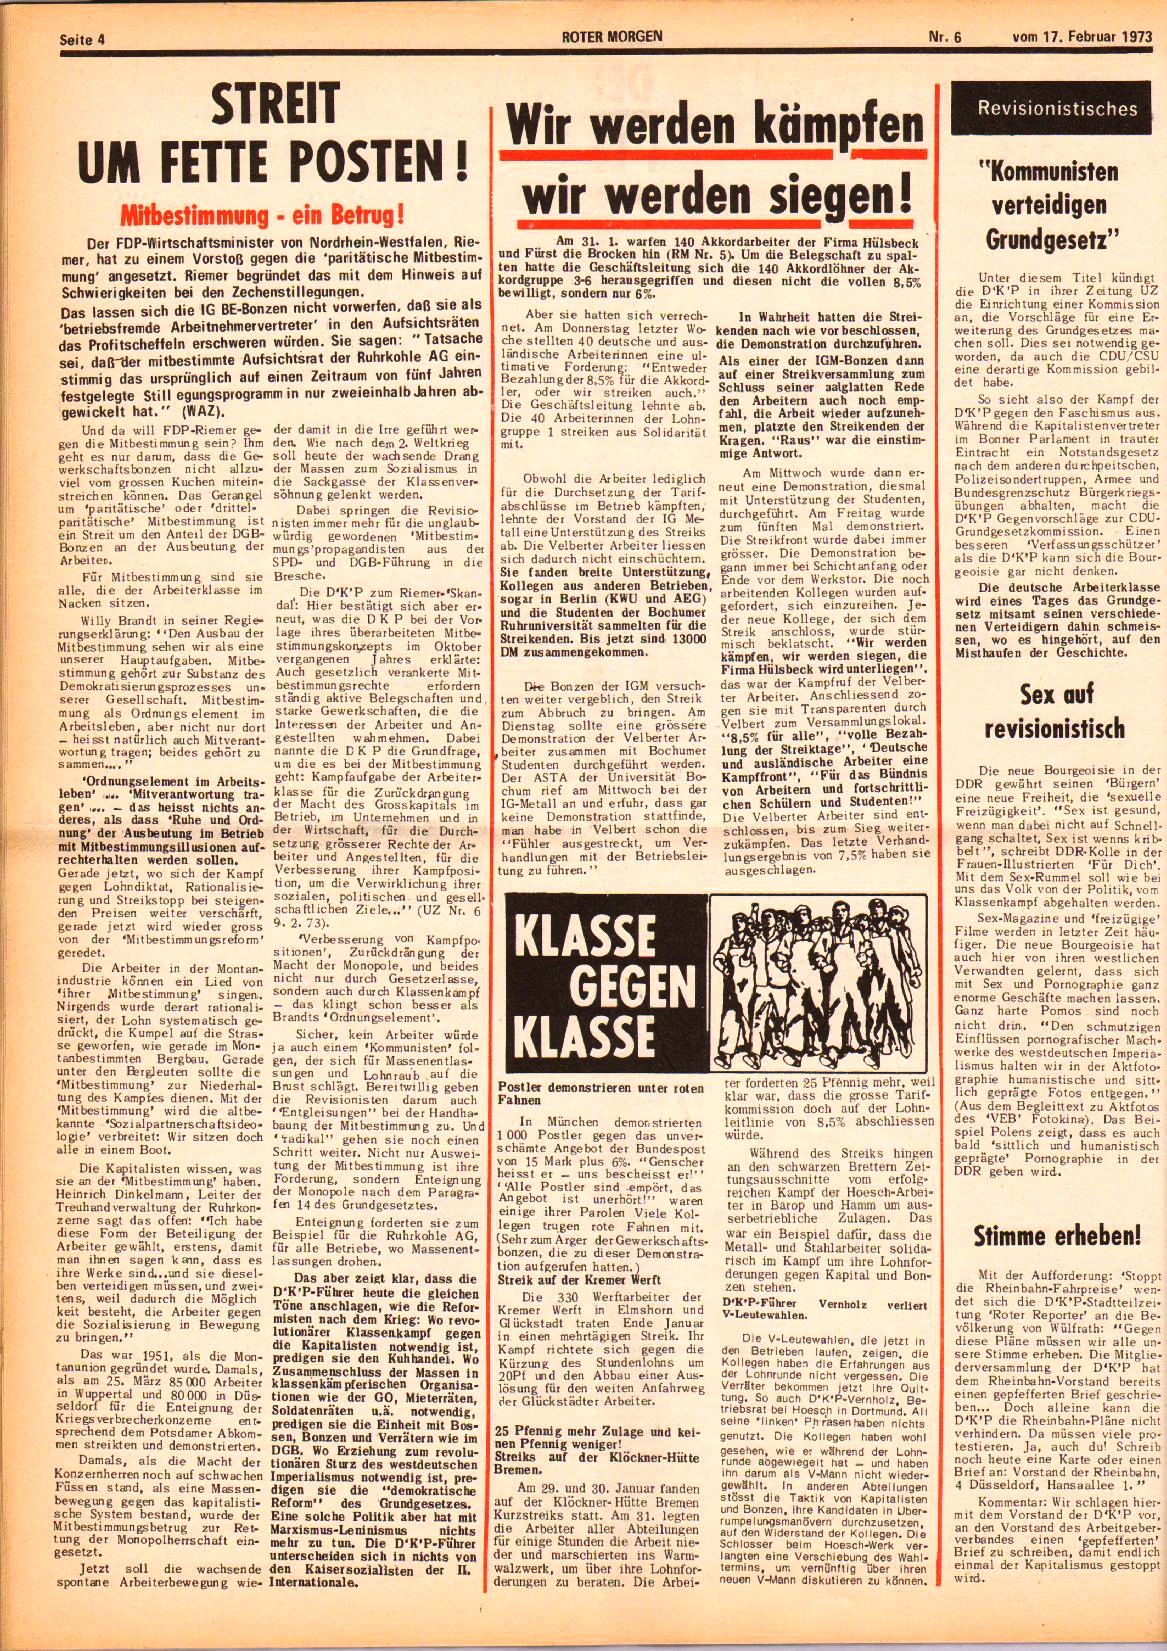 Roter Morgen, 7. Jg., 17. Februar 1973, Nr. 6, Seite 4